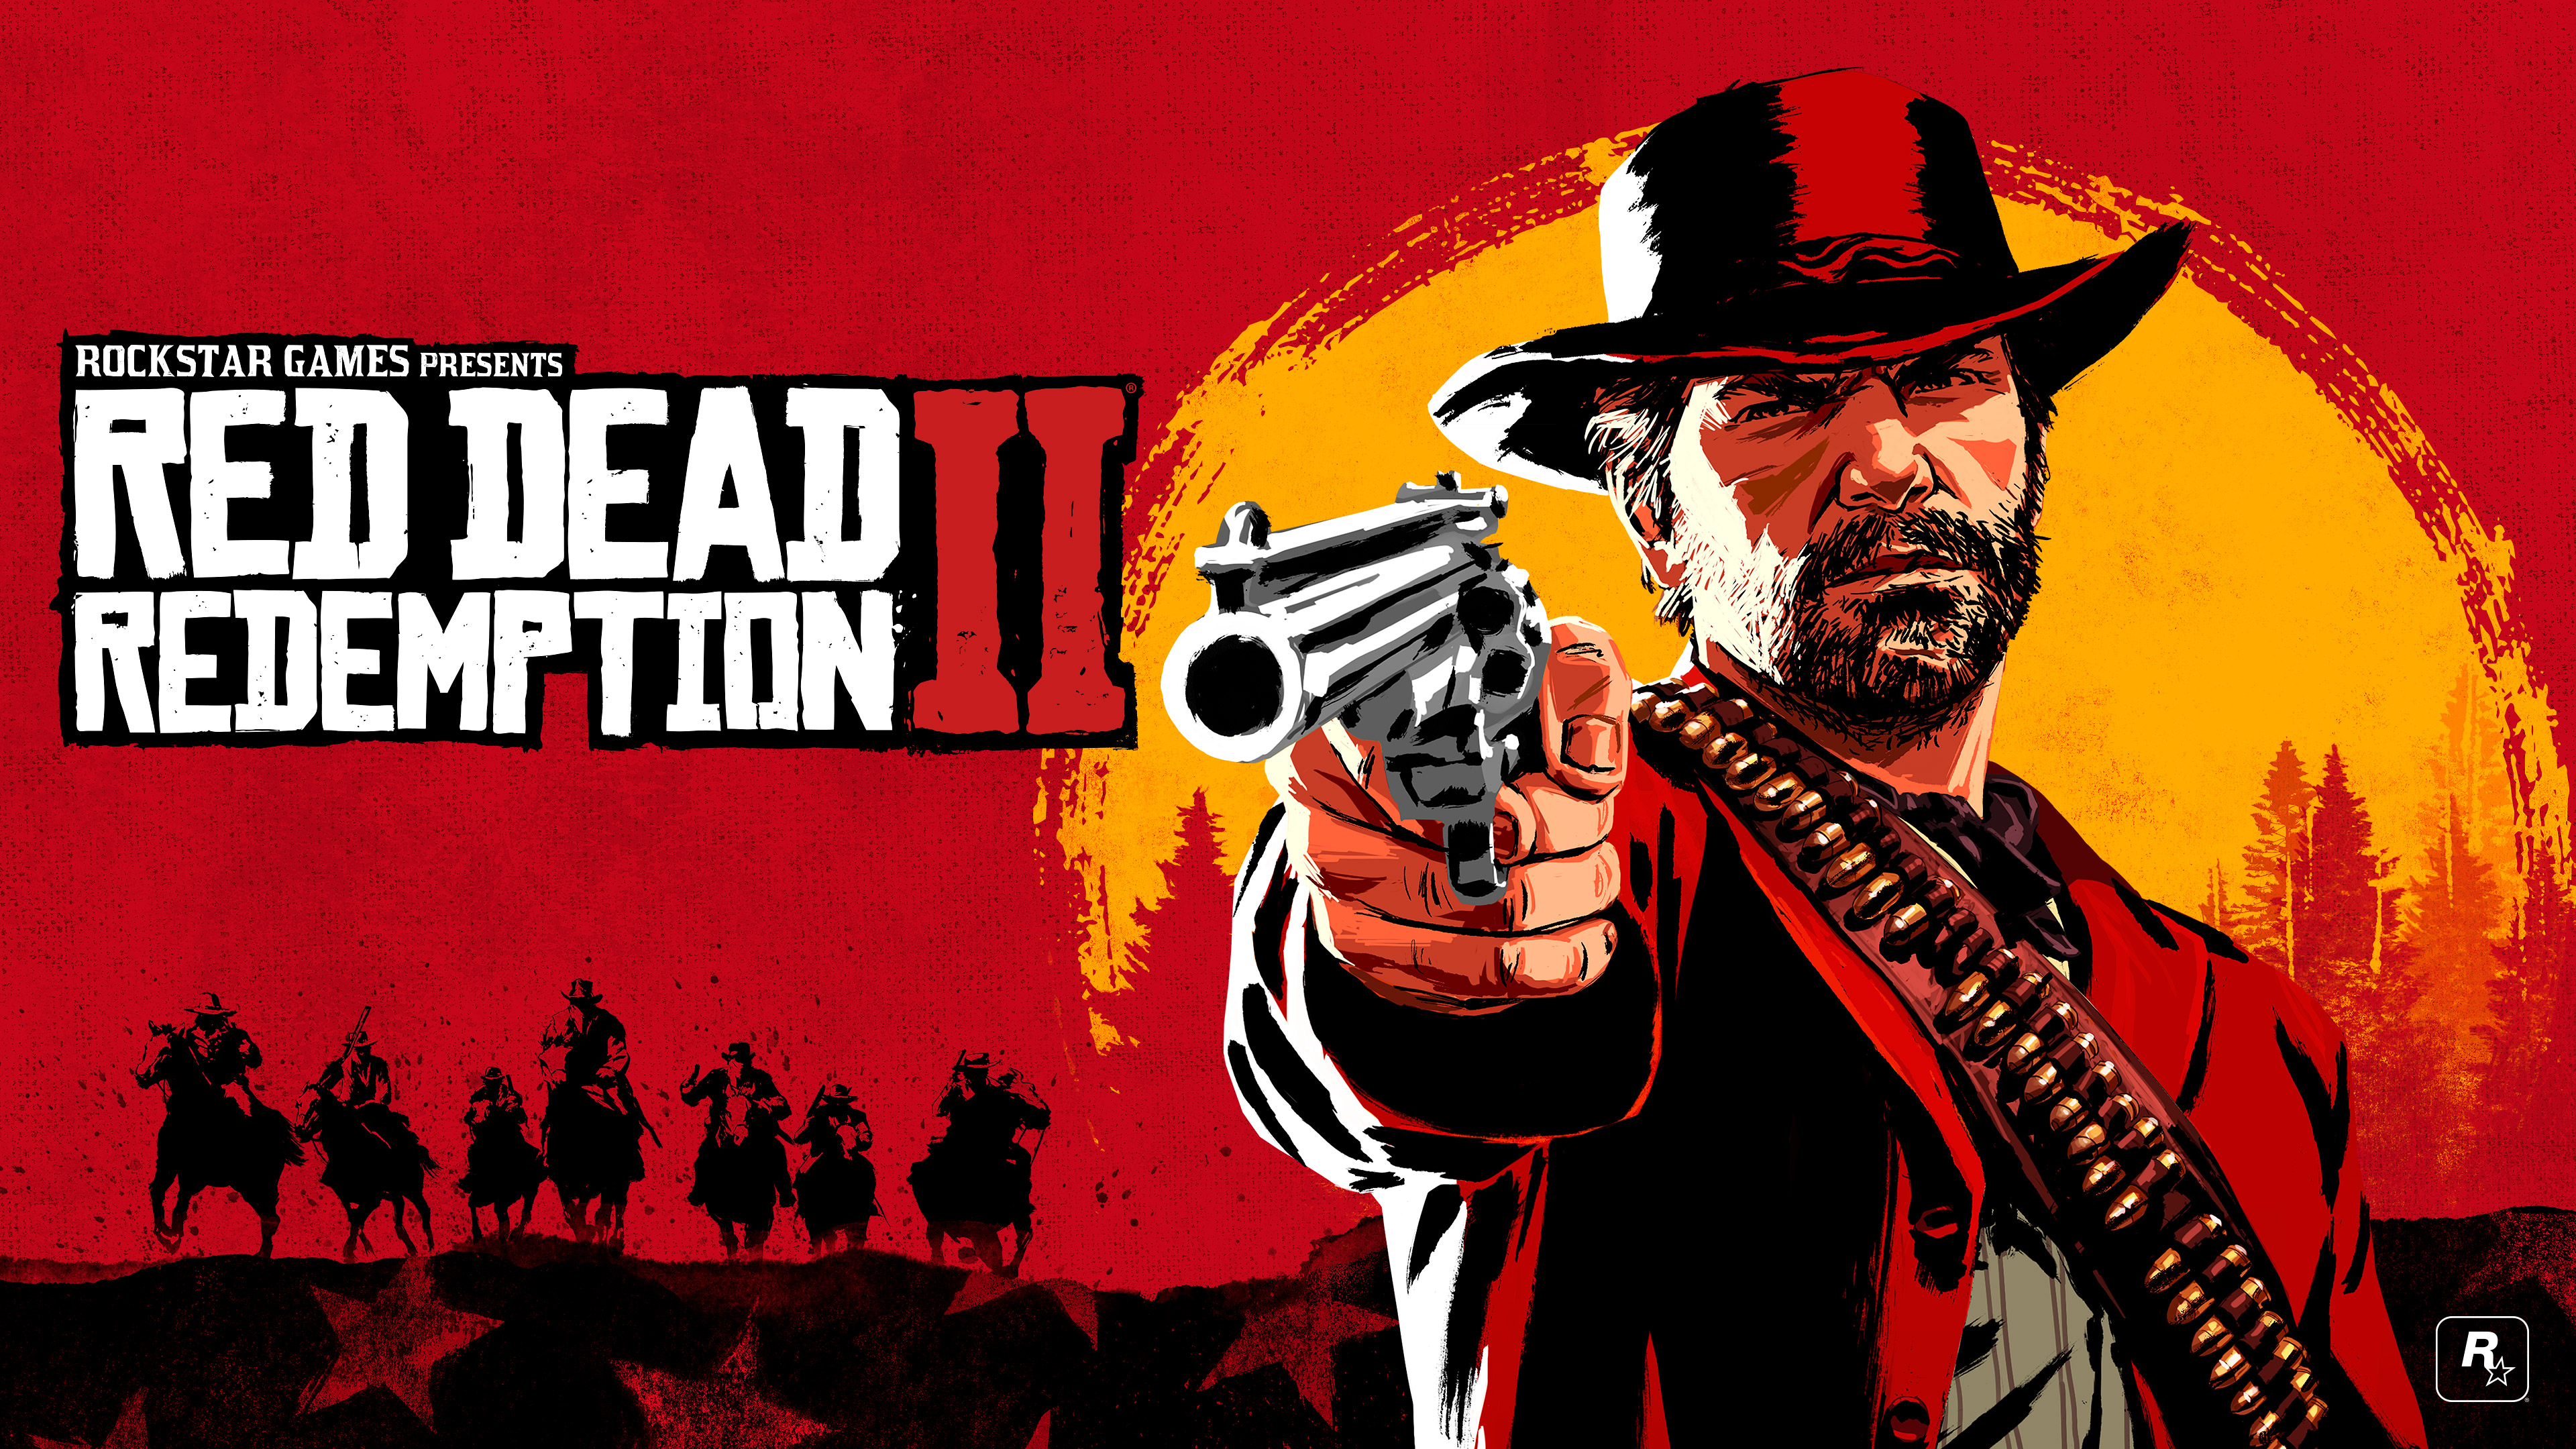 Red Dead Redemption 2 Wallpaper for desktop devices